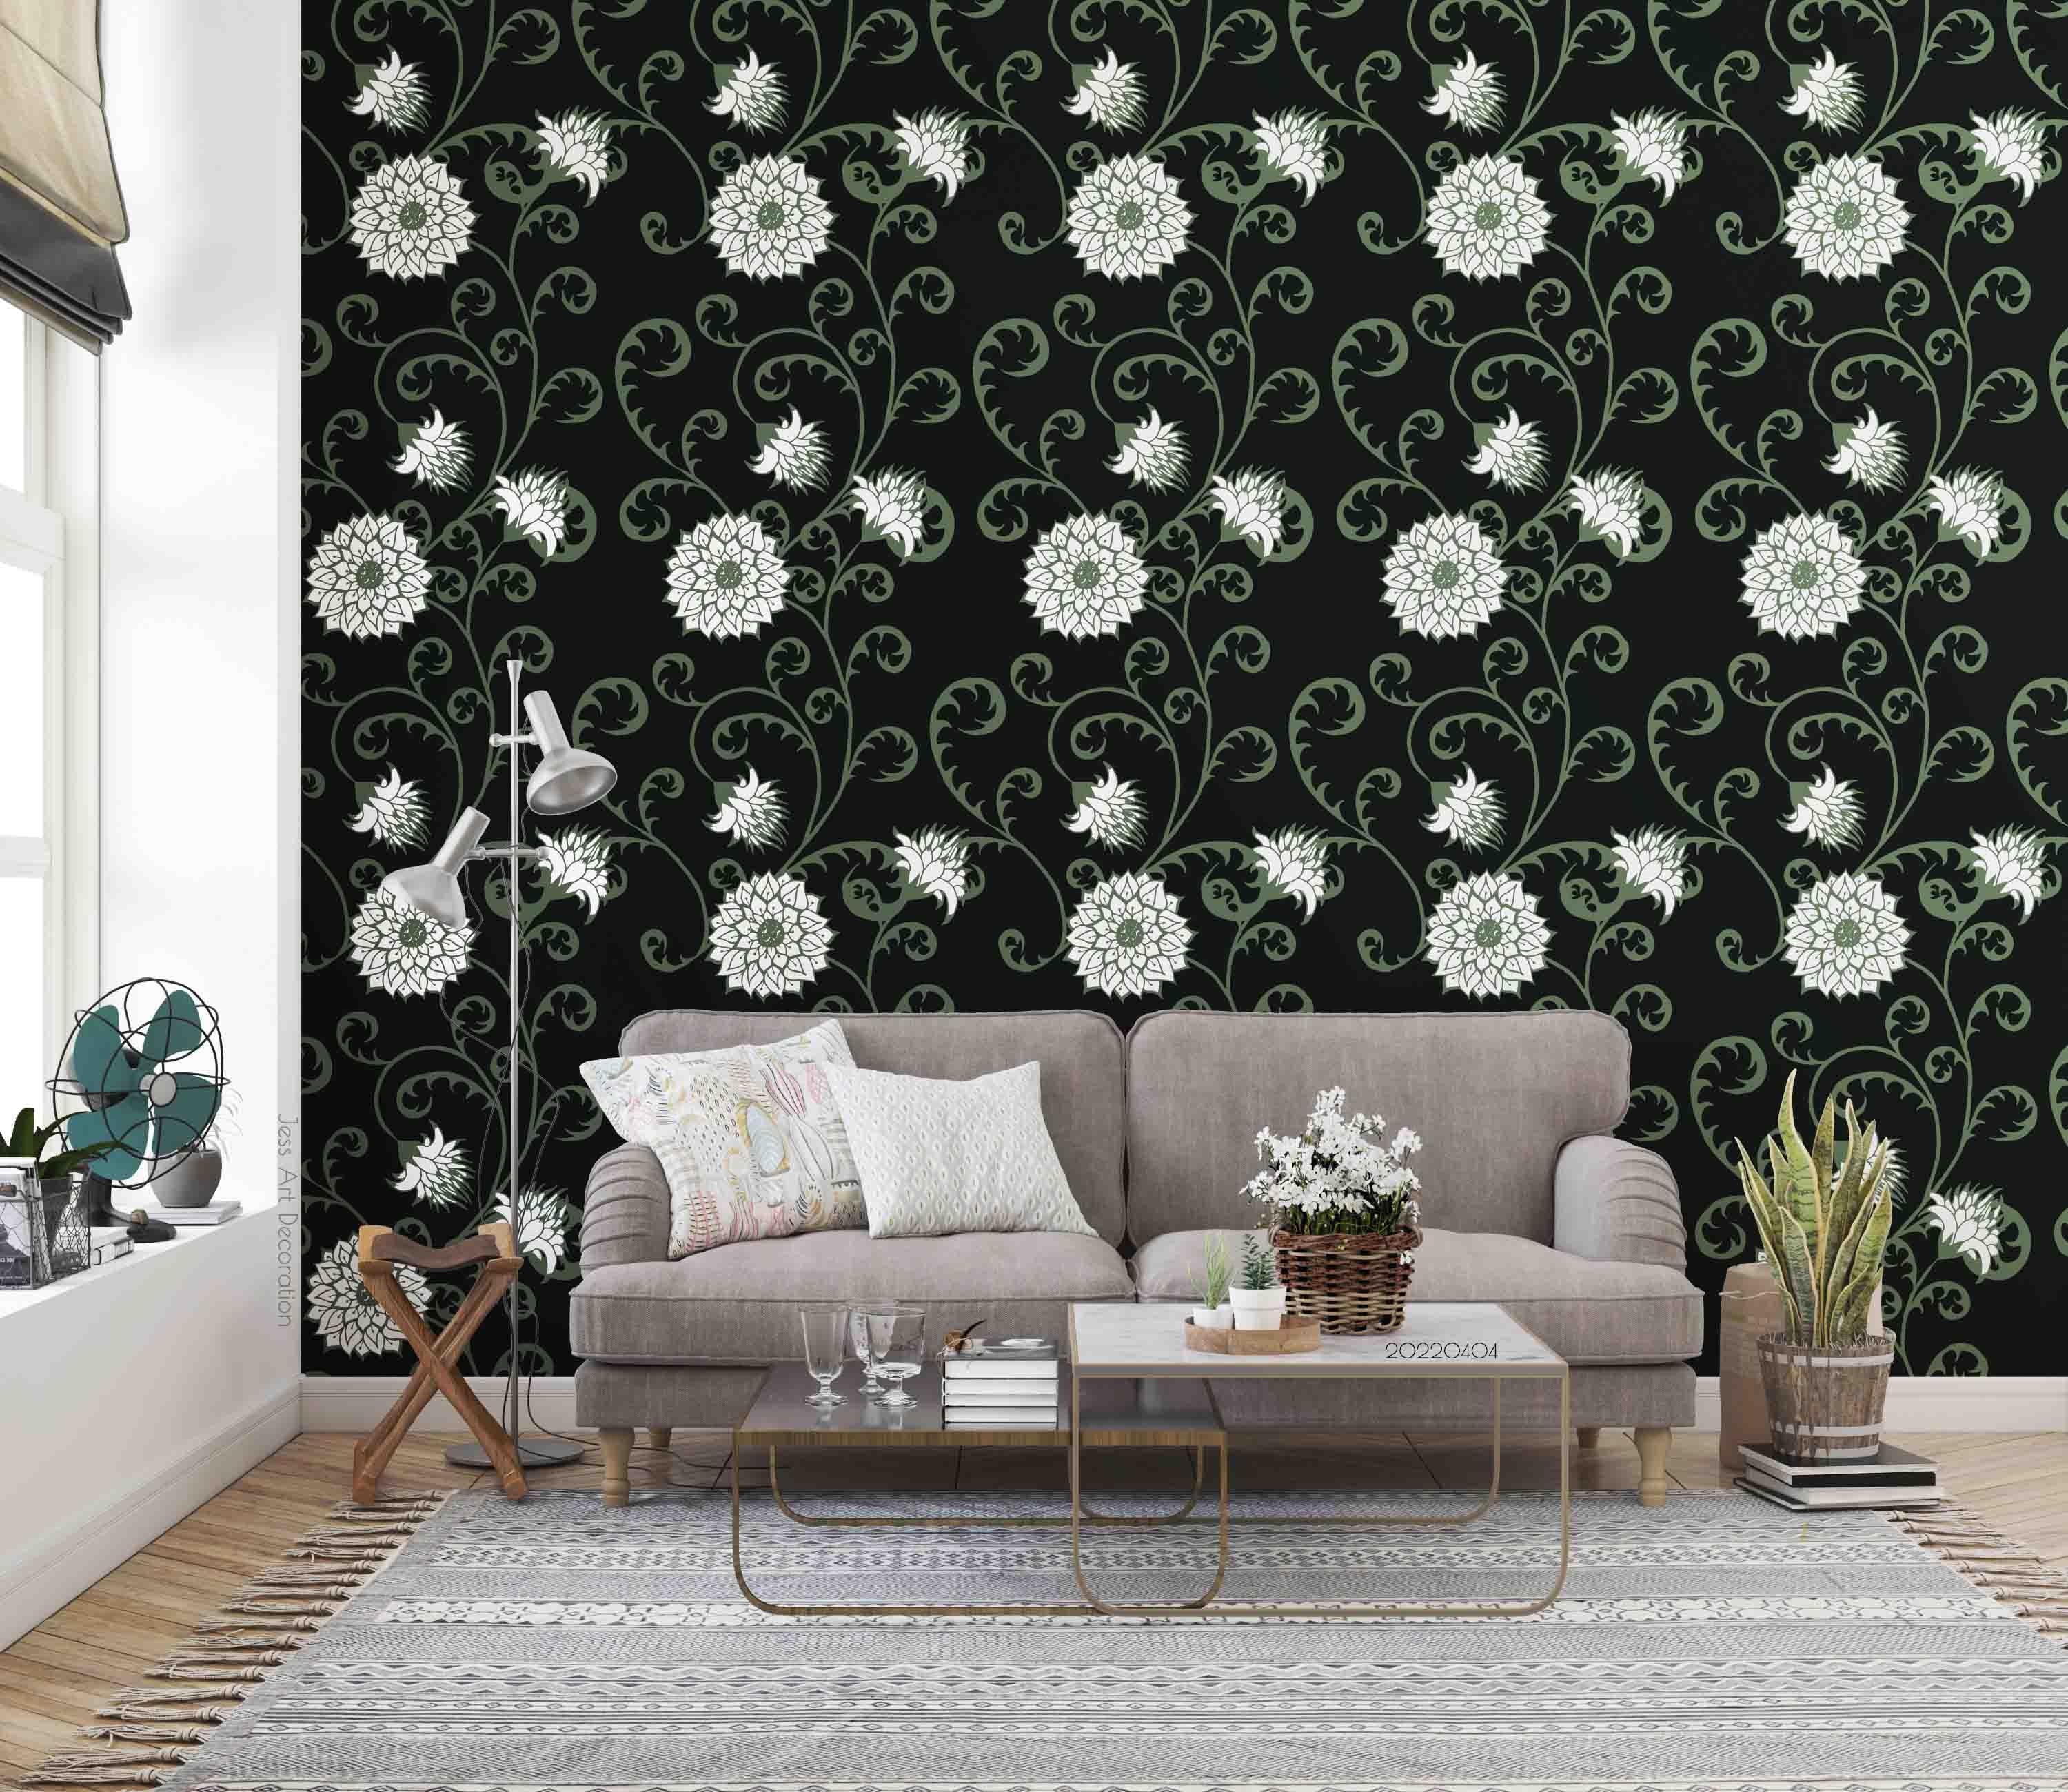 3D Vintage Plants Floral Black Background Wall Mural Wallpaper GD 4010- Jess Art Decoration